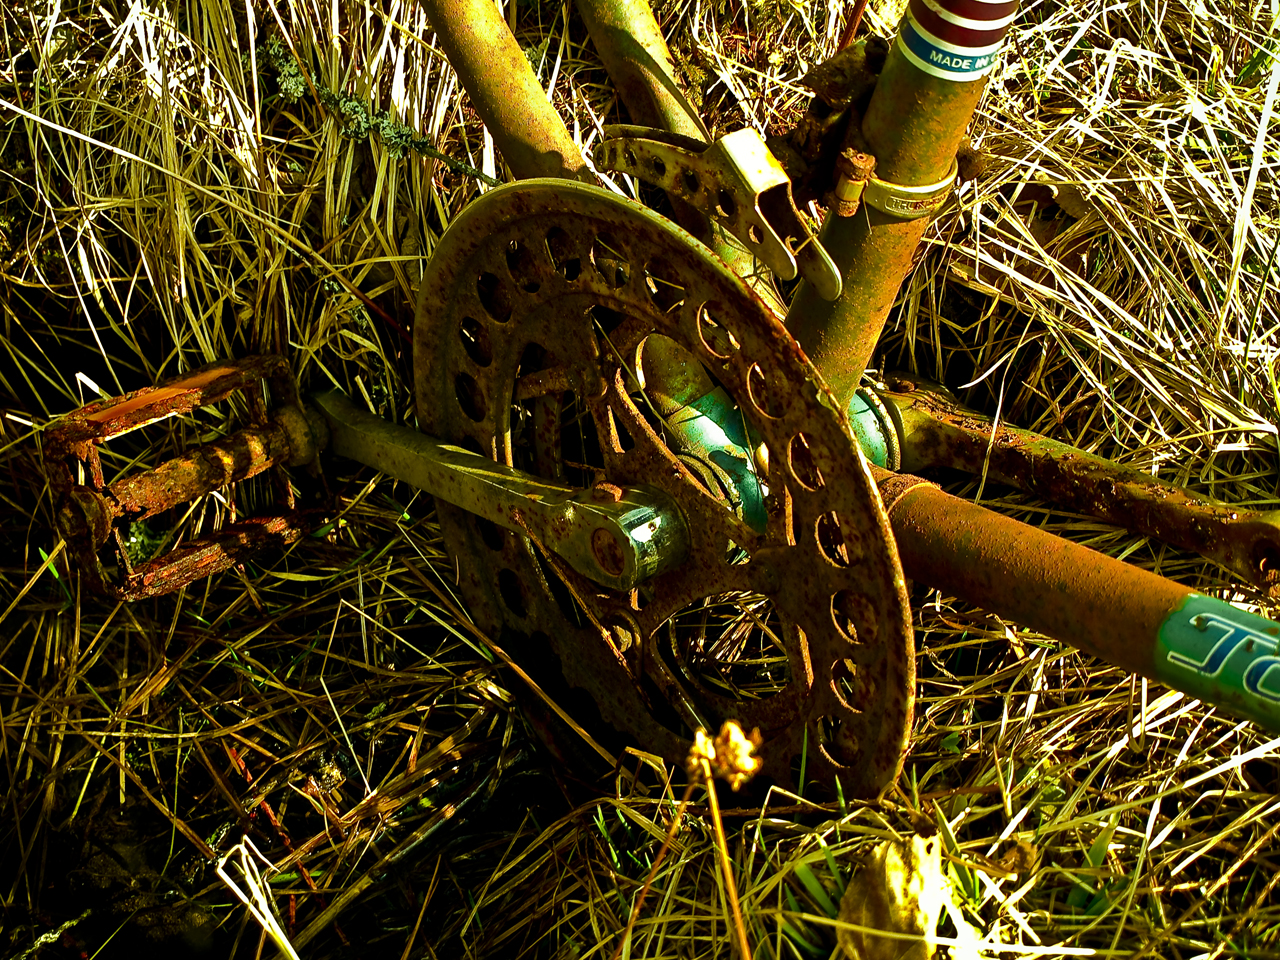 This_Rusty_Bike_by_20smoke20.jpg